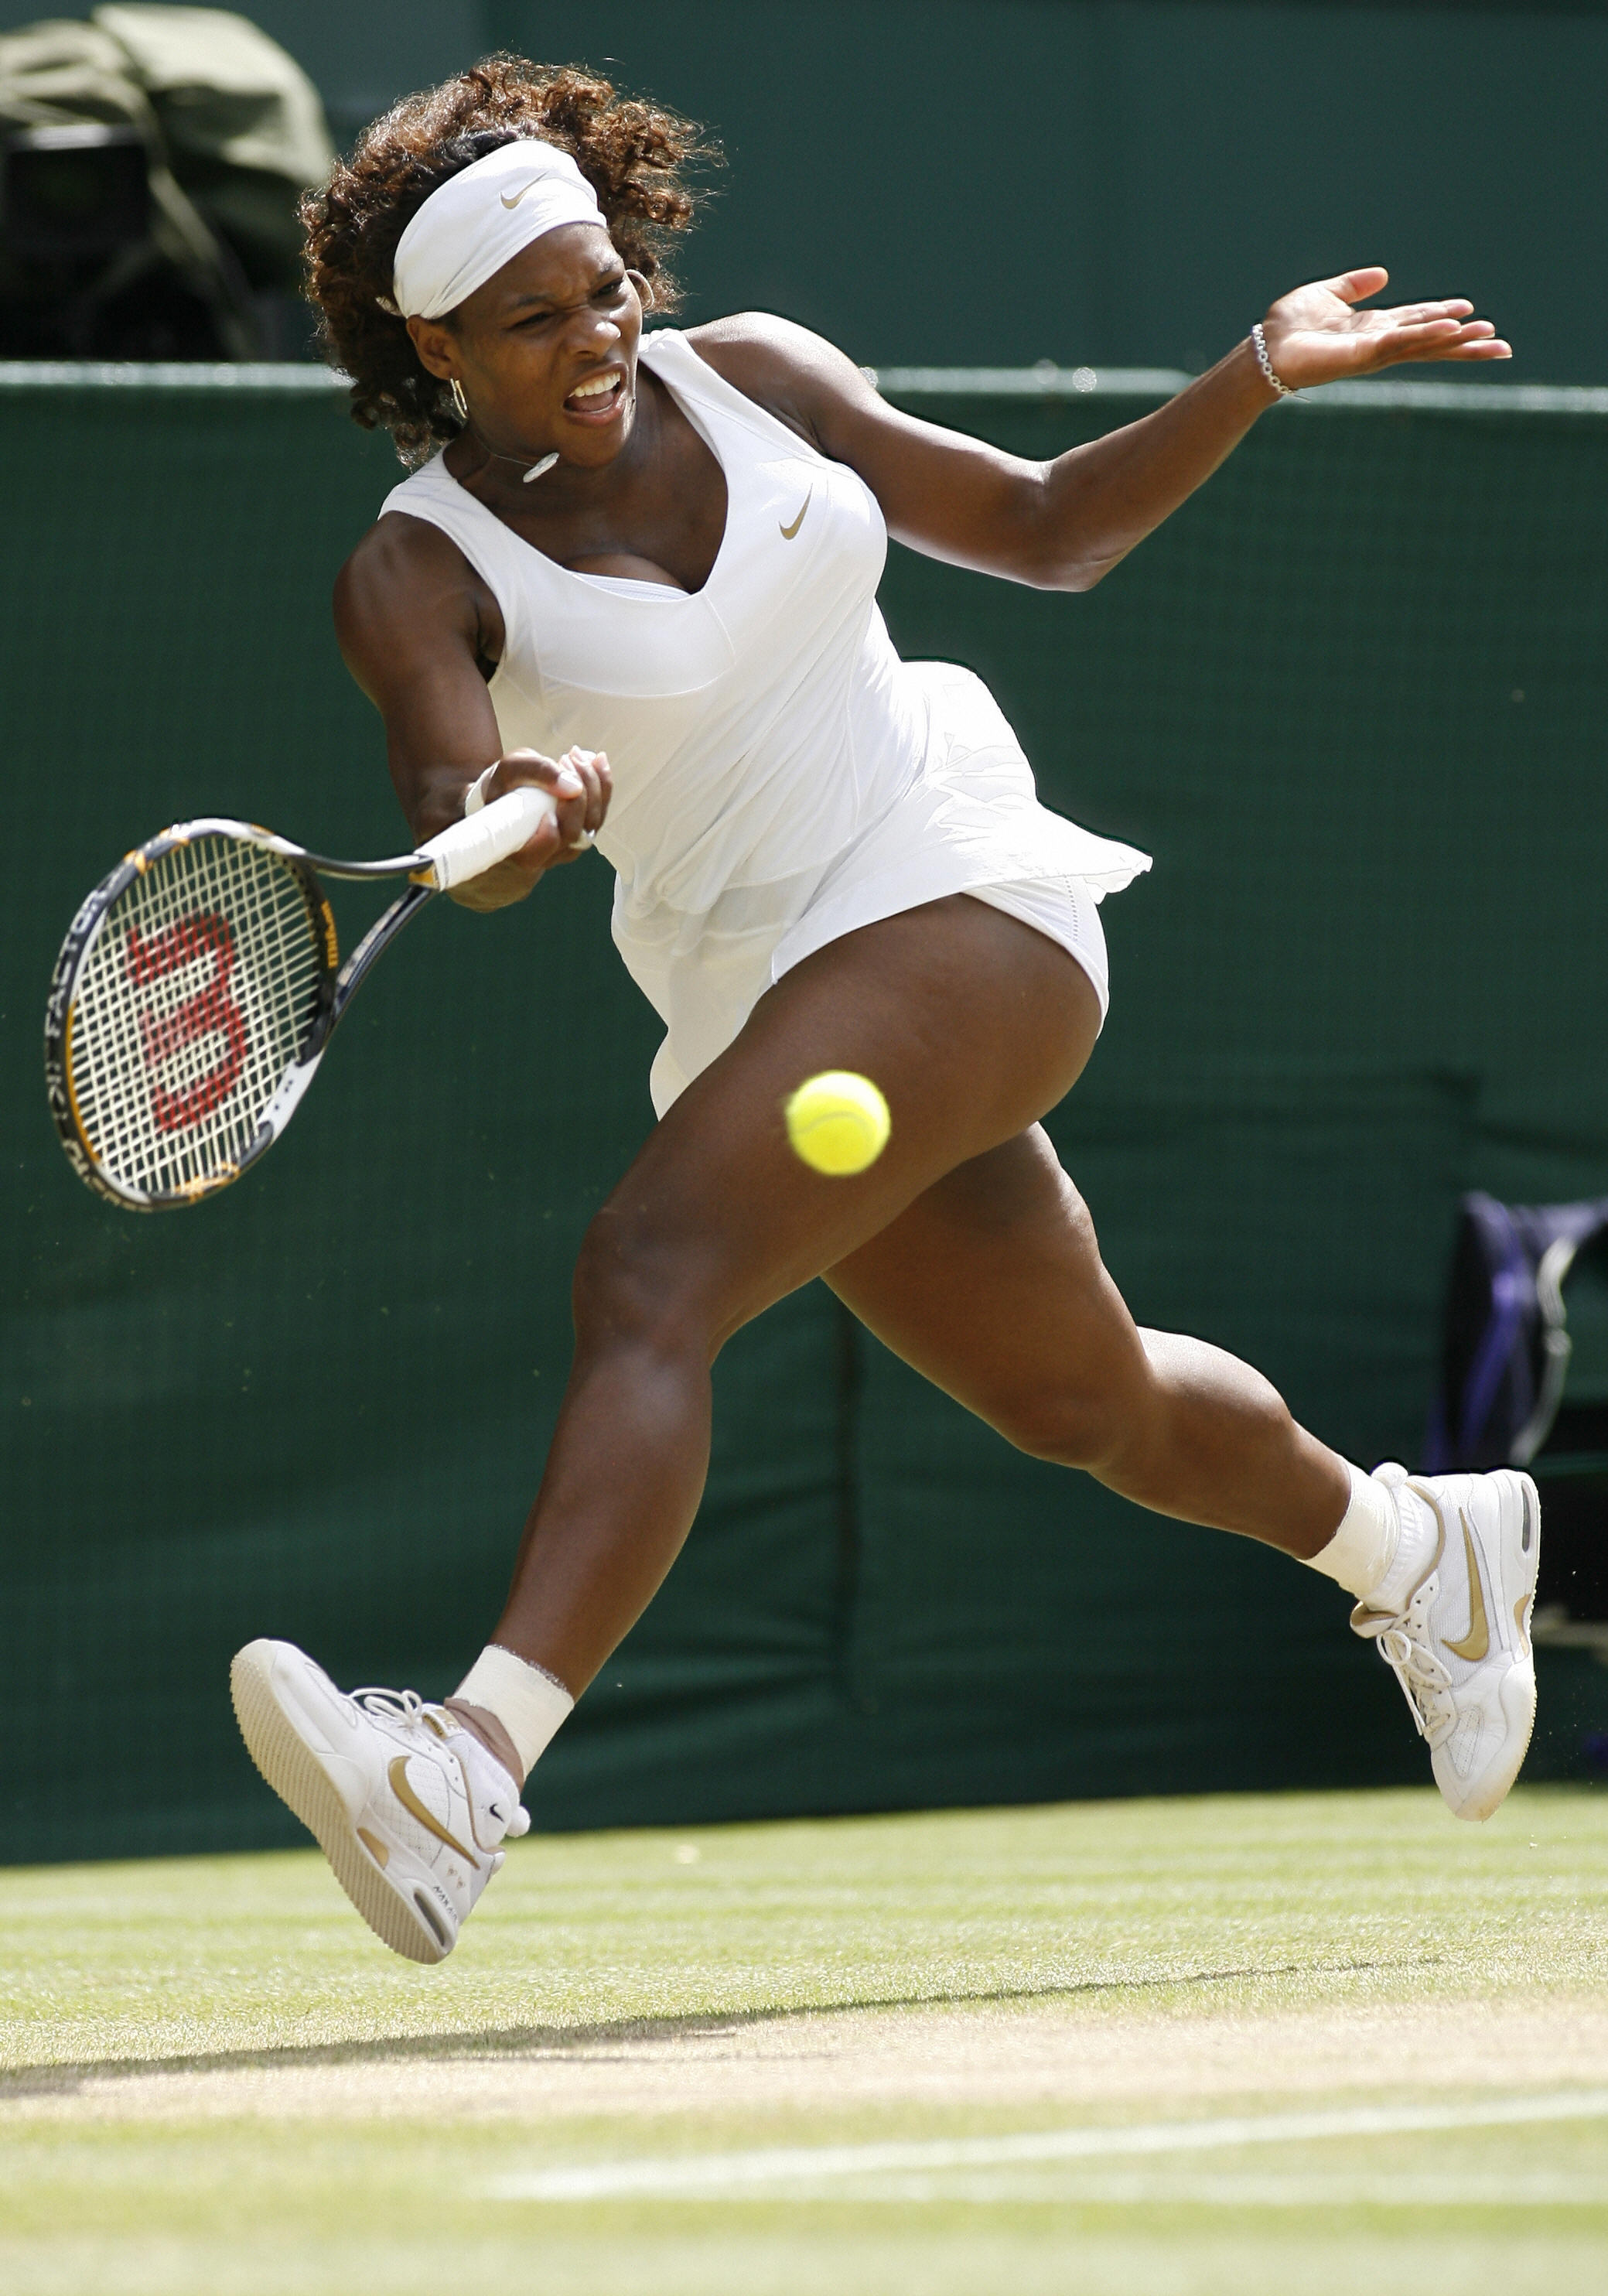 Serena Williams Wins Wimbledon 2009 in the Nike Air Max Mirabella 2